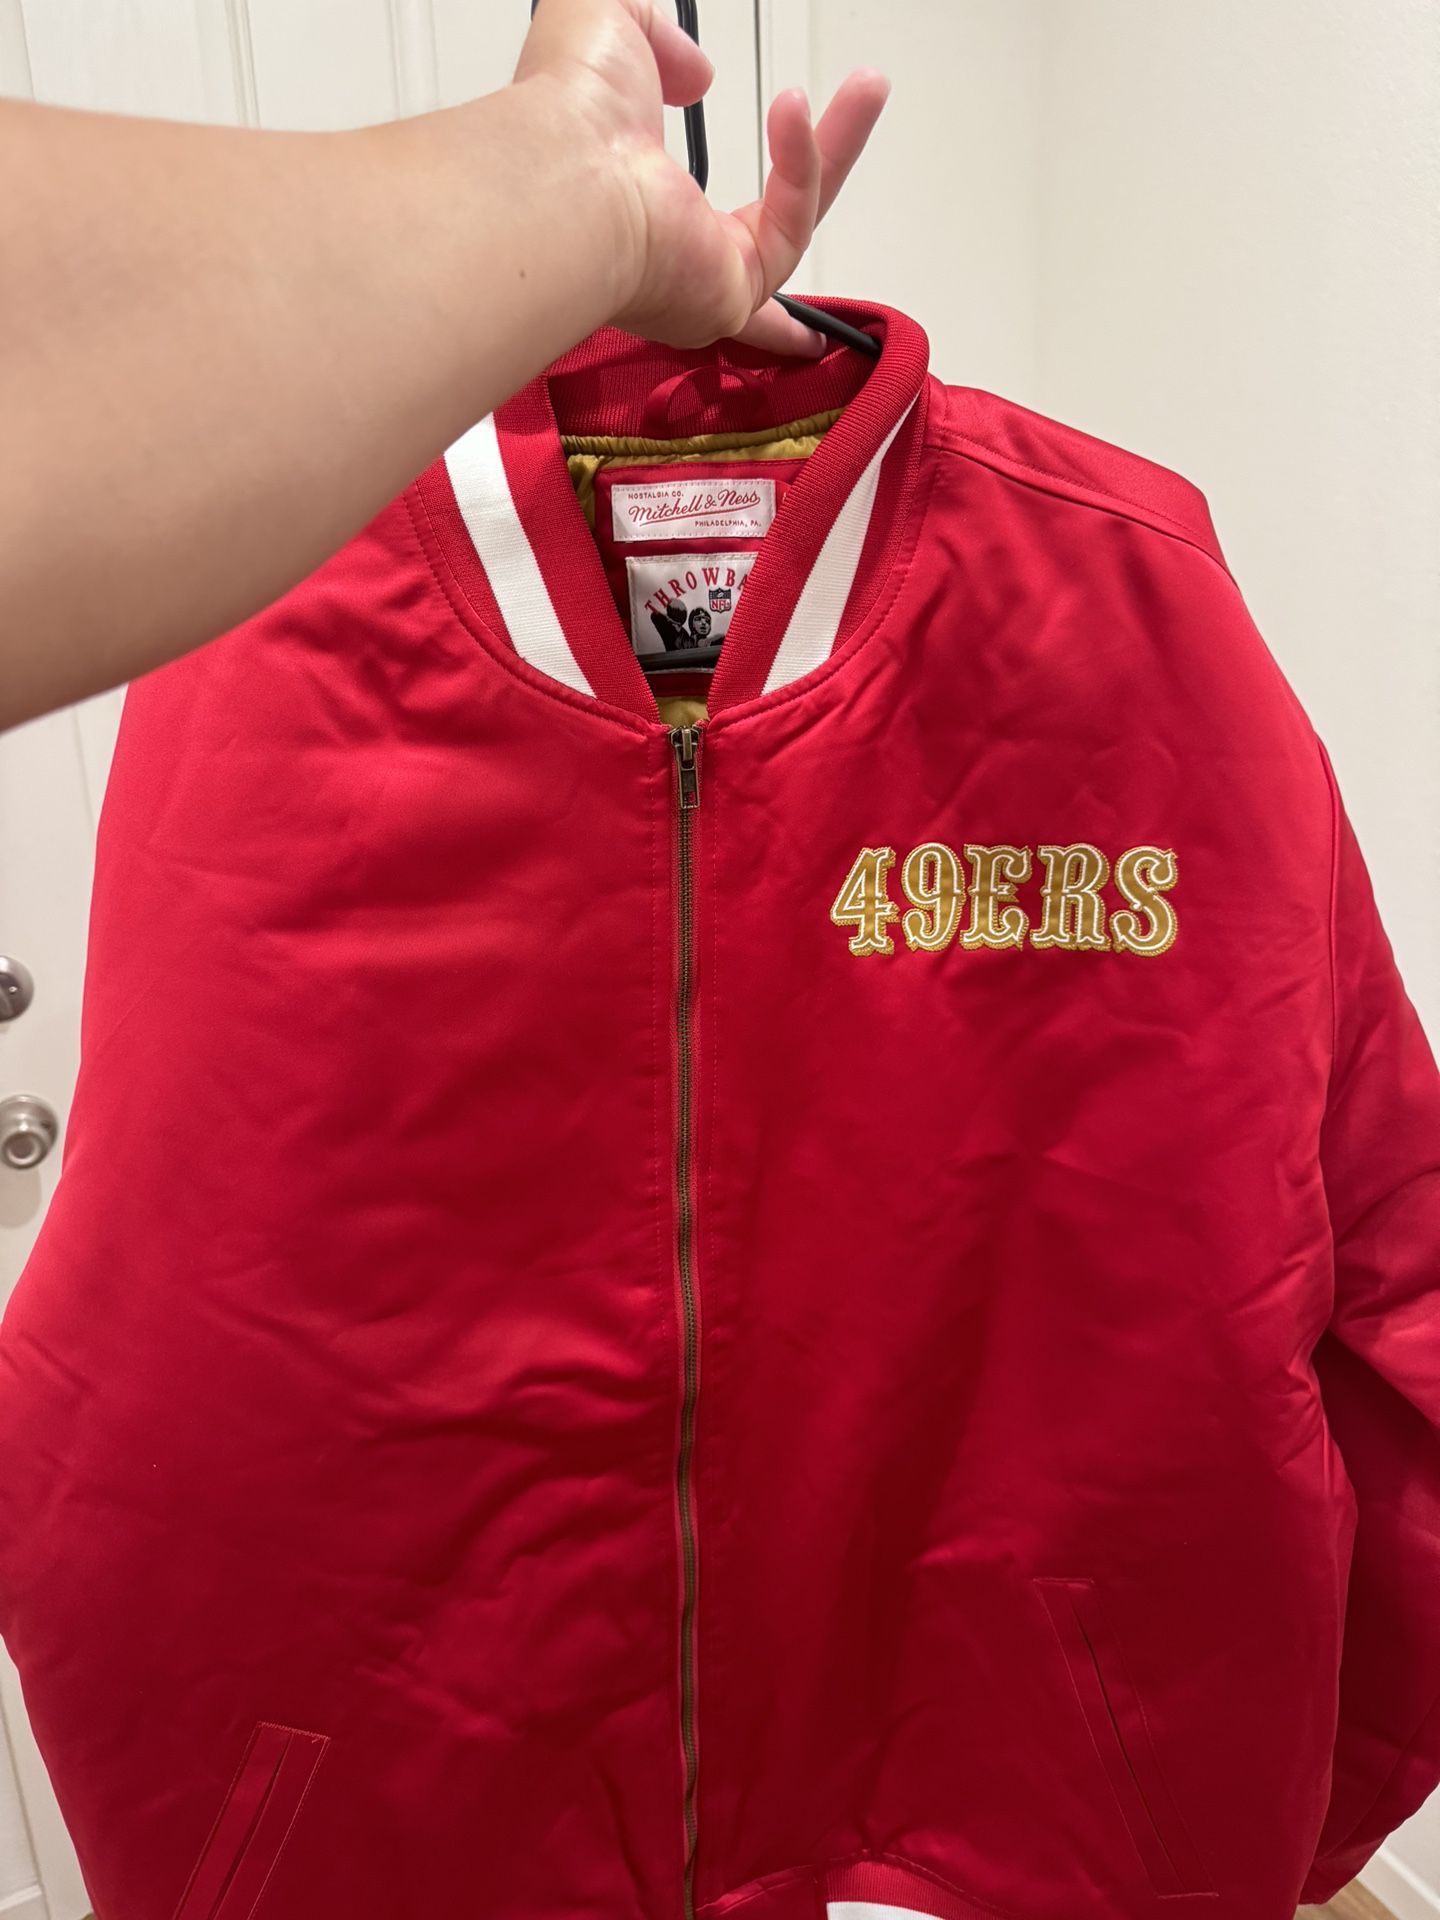 49ers Jacket